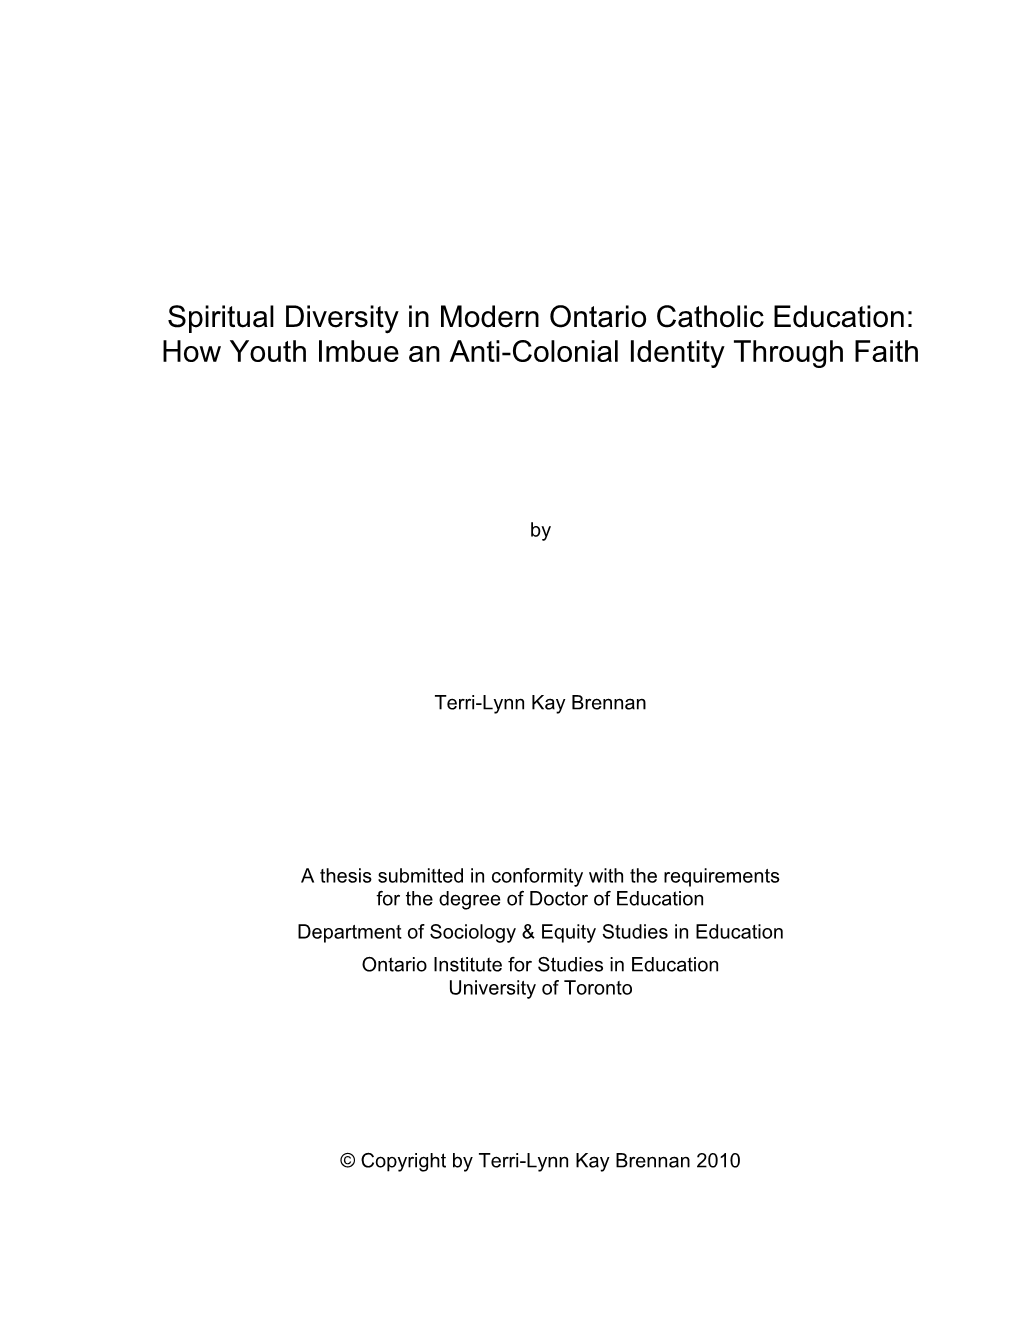 Spiritual Diversity in Modern Ontario Catholic Education: How Youth Imbue an Anti-Colonial Identity Through Faith